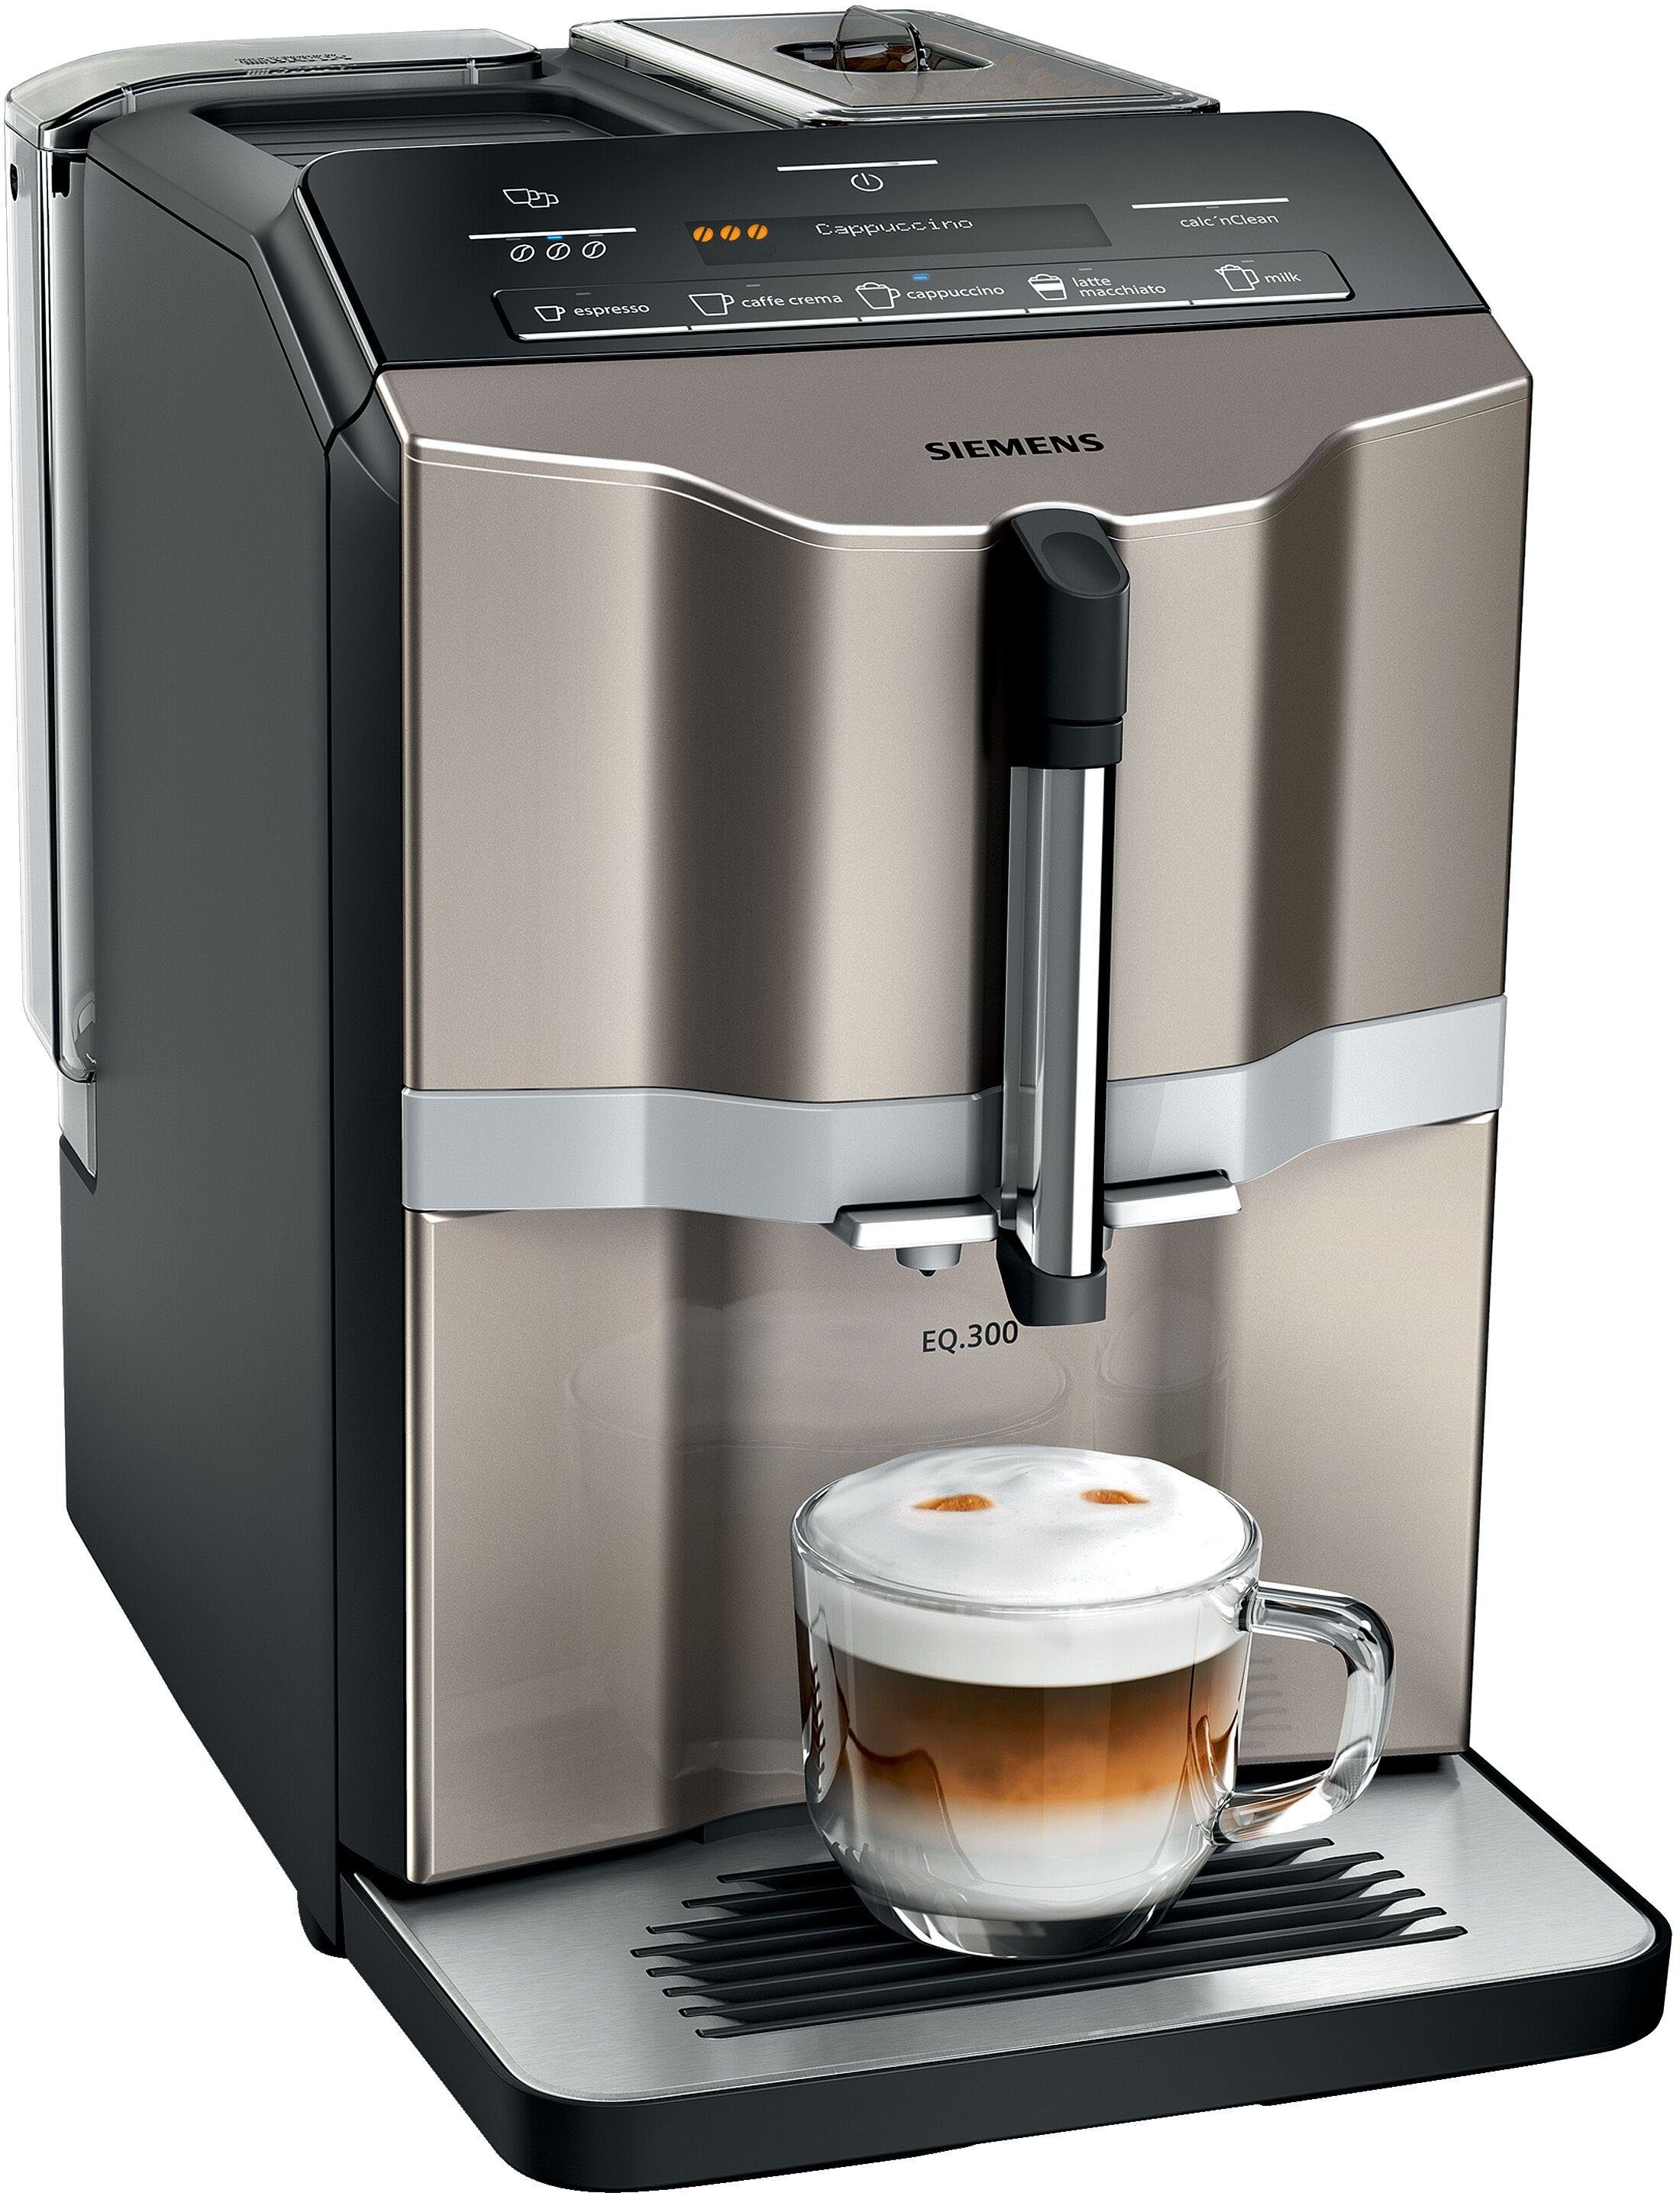 SIEMENS Kaffeevollautomat EQ.300 TI353514DE, einfache Zubereitung, 5 Kaffee-Milch-Getränke, LCD-Dialog-Display